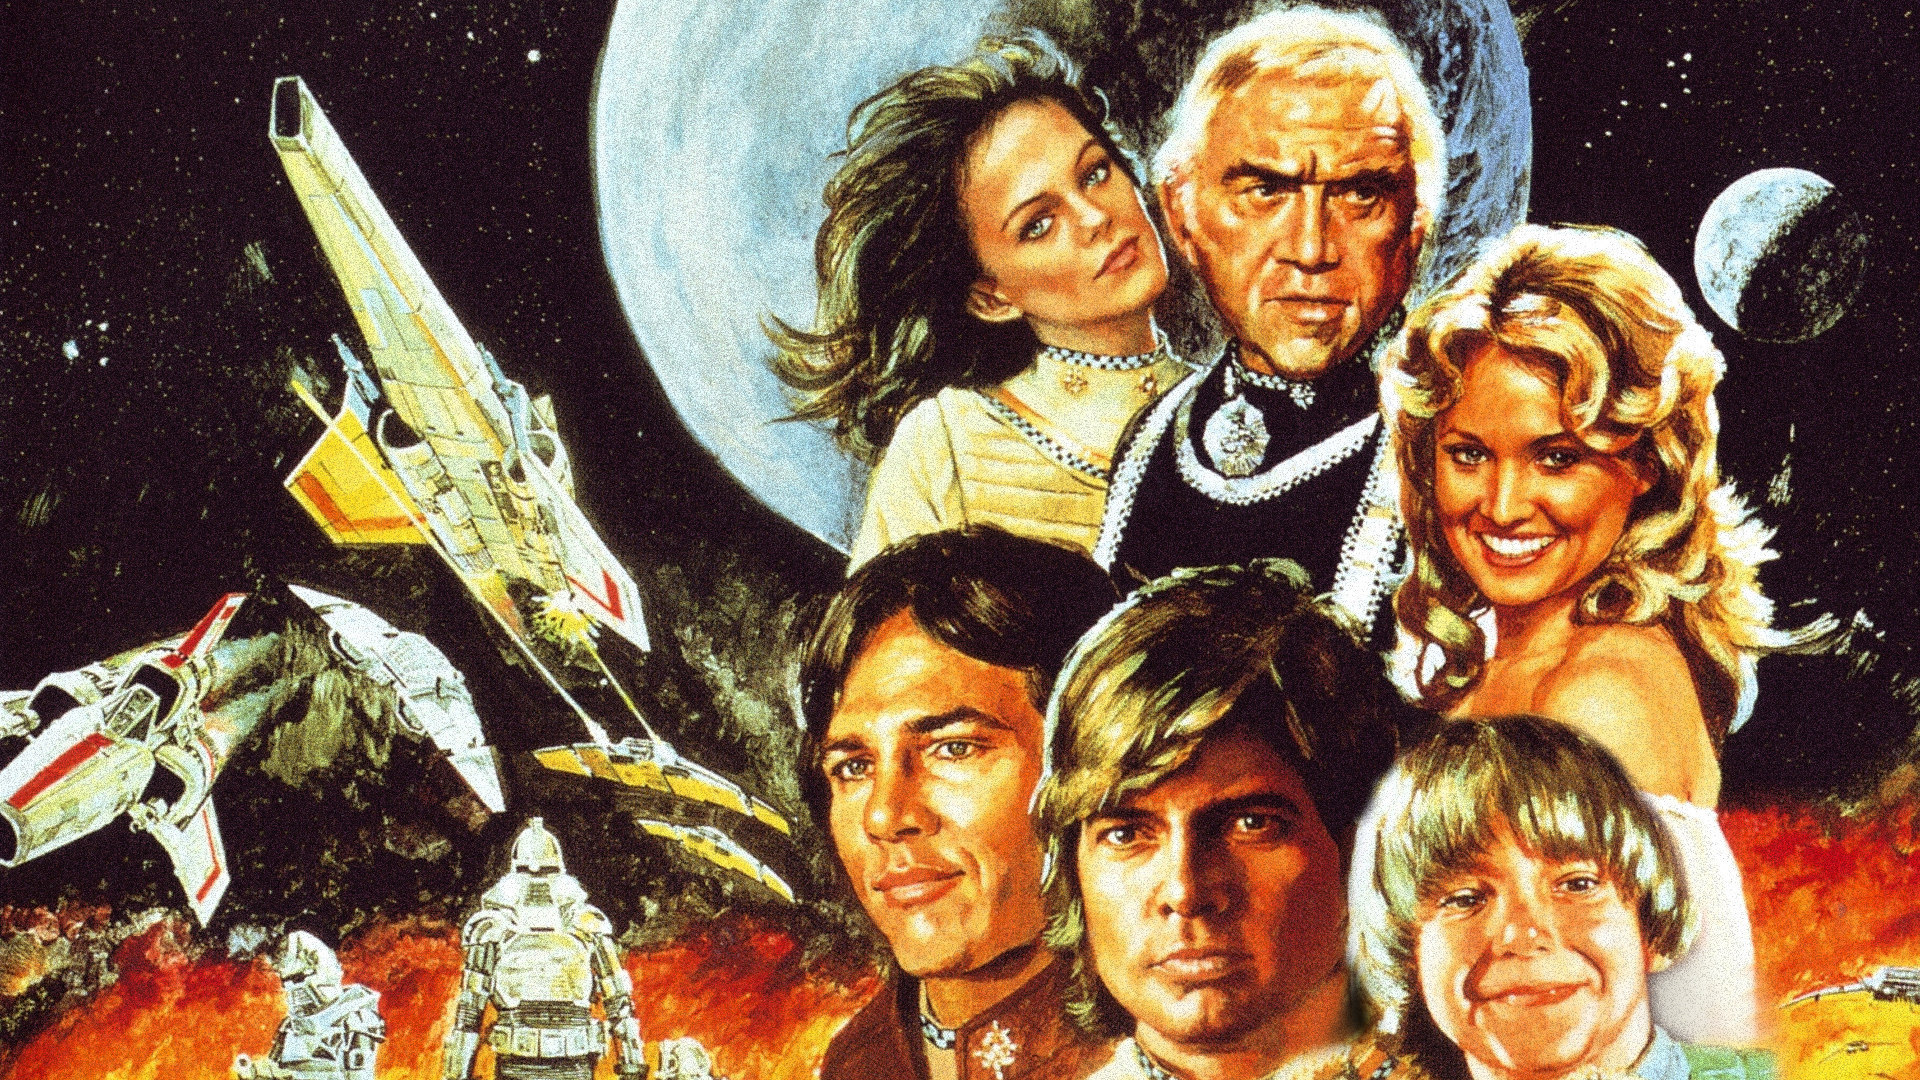 Movie Wallpaper And Backdrops For Battlestar Galactica